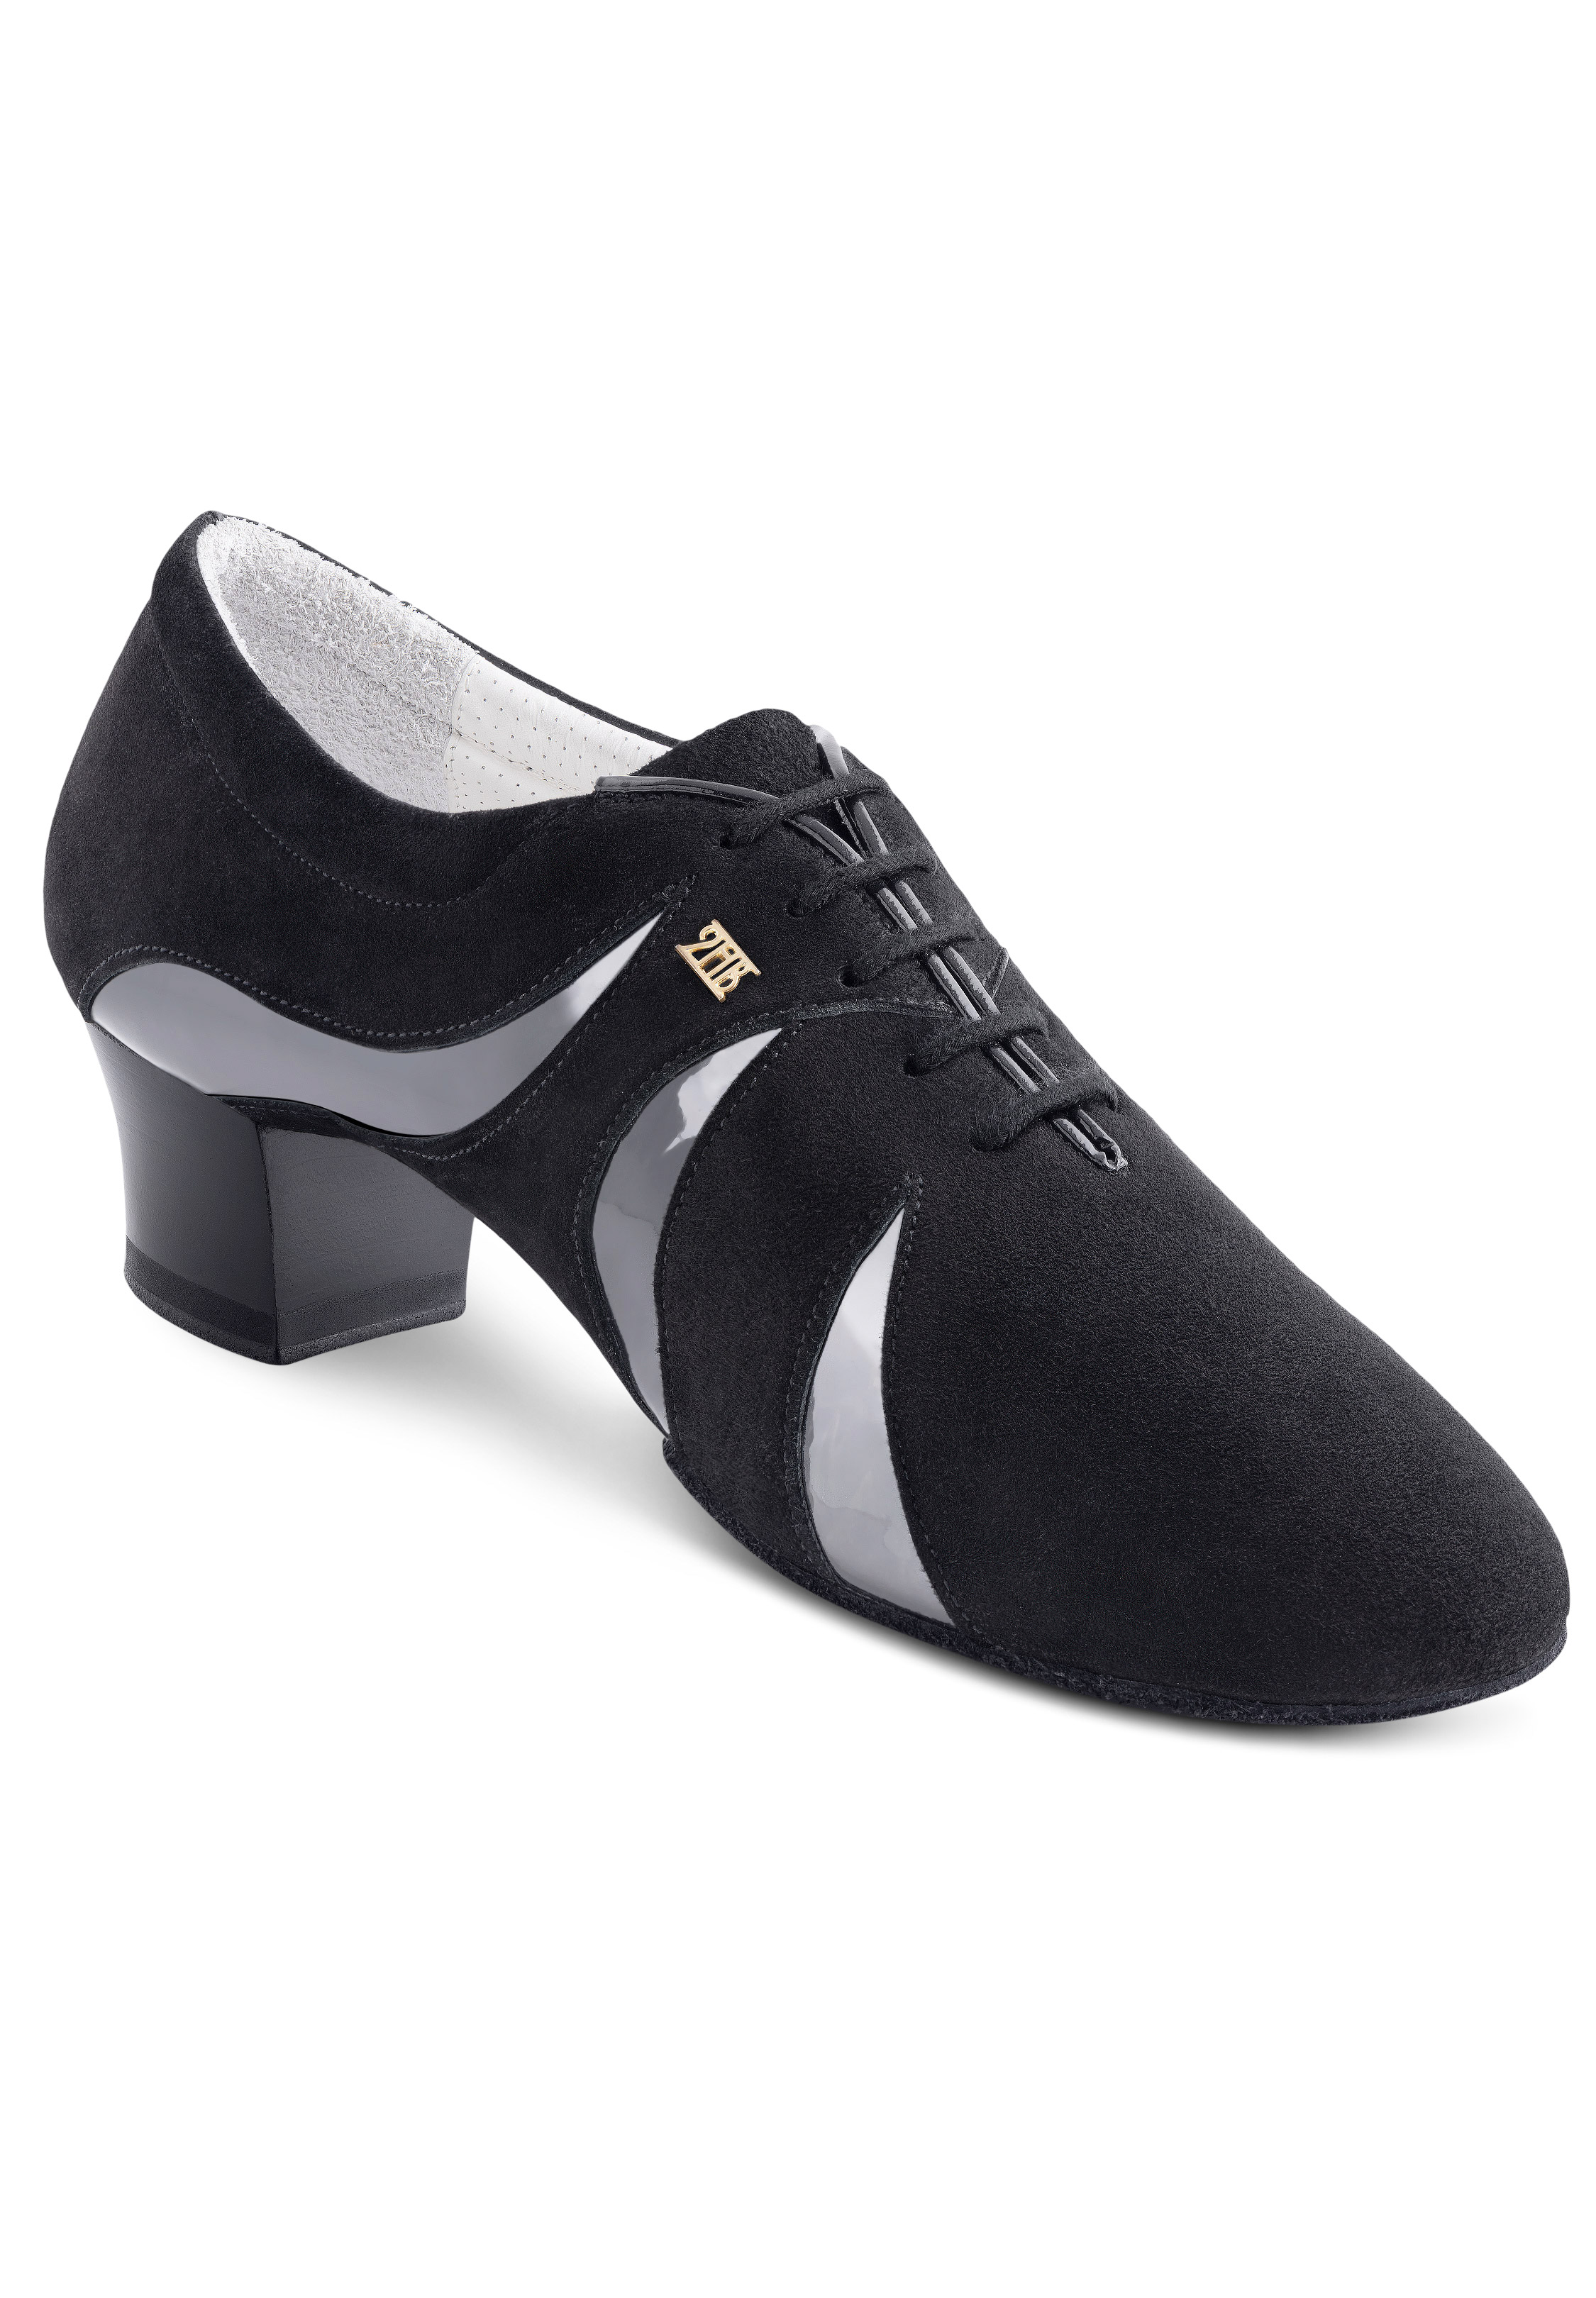 TPS High Quality Black Leather Latin Ballroom Salsa Custom-made Dance Shoes D998 